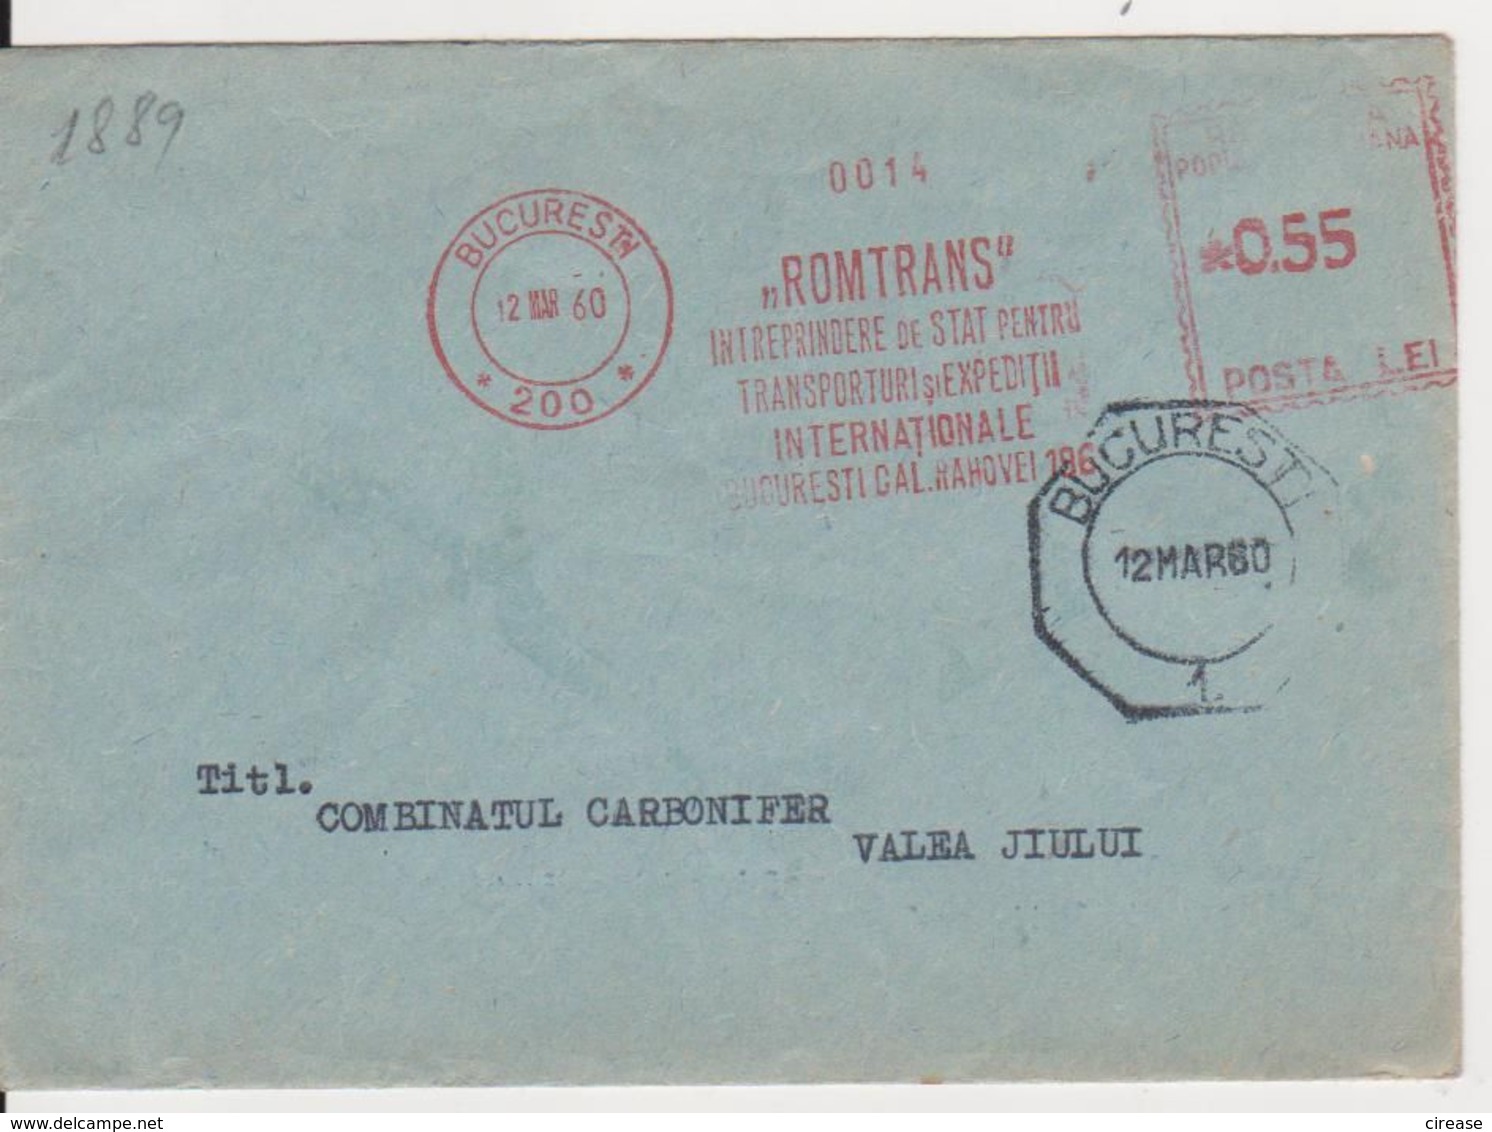 BUCURESTI AMONT 0,55, ROMTRANS INTERNATIONAL TRANSPORT RED MACHINE ATM STAMPS, ROMANIA 1960 - Franking Machines (EMA)